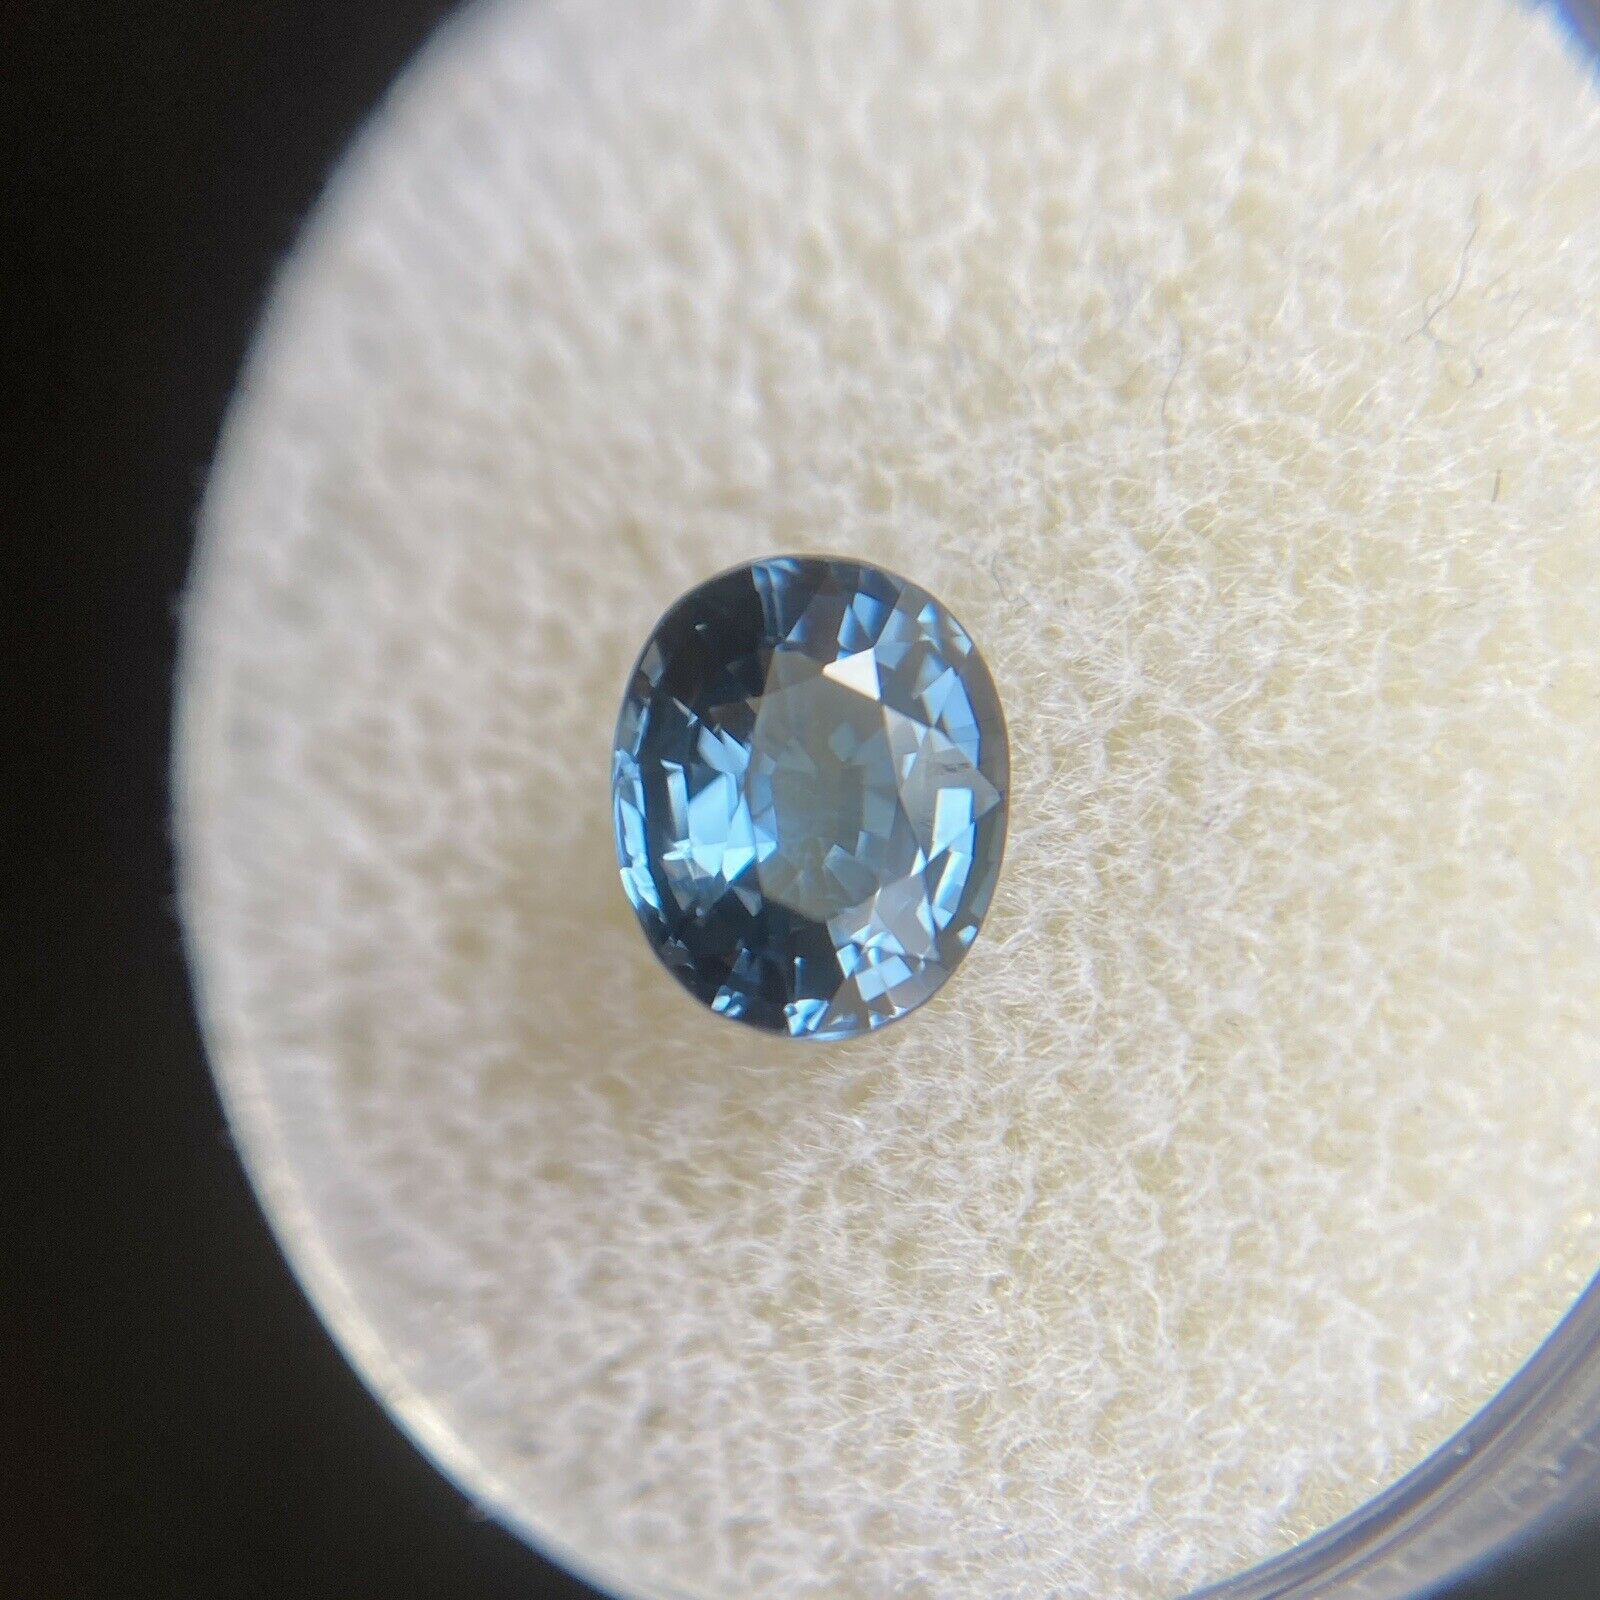 Fine pierre précieuse rare non sertie, spinelle bleue taille ovale de 1,20 carat